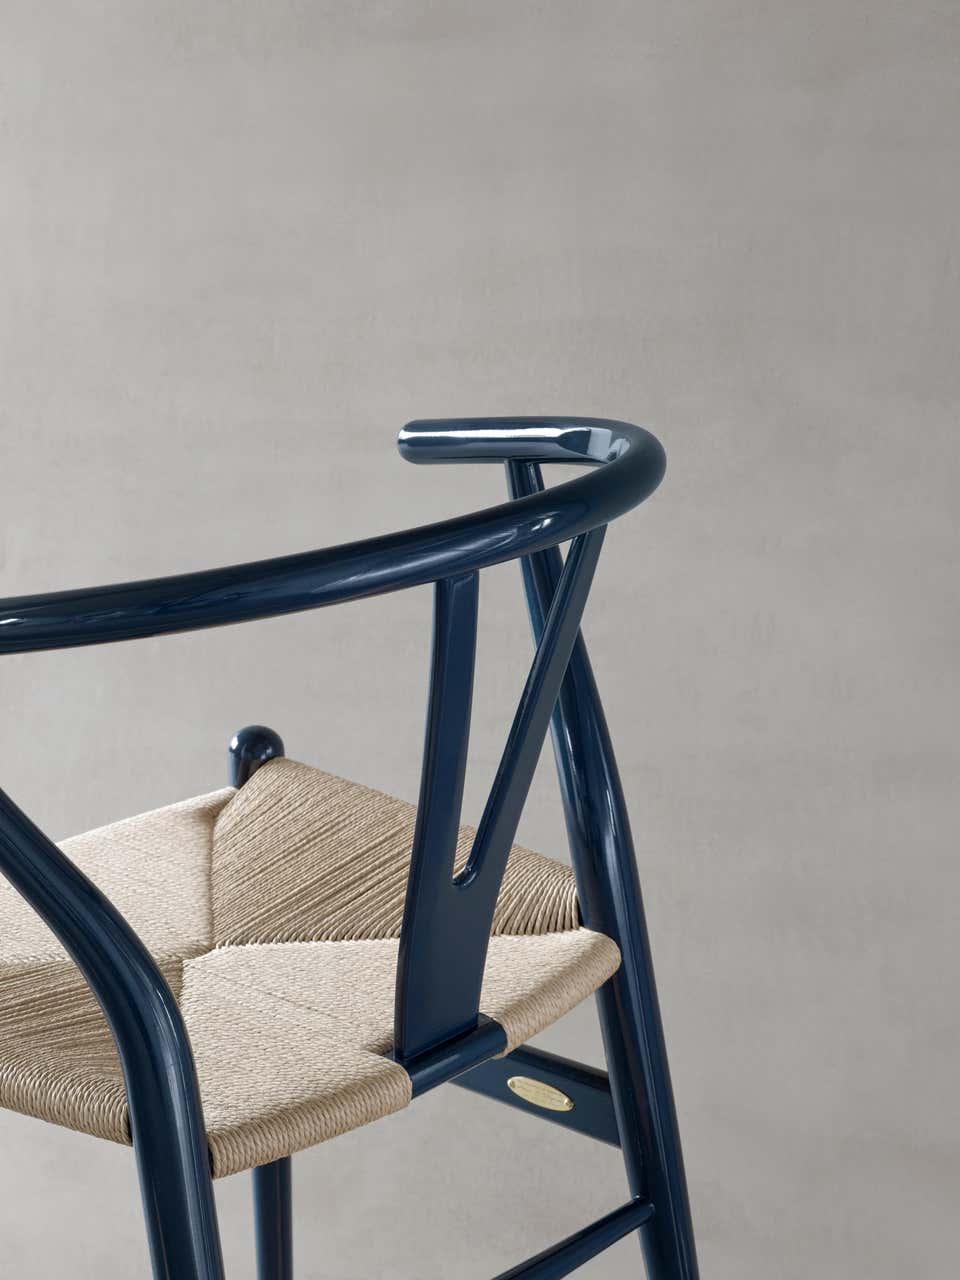 Hans Wegner’s Wishbone Chair Still Feels Fresh, 70 Years after Its Debut